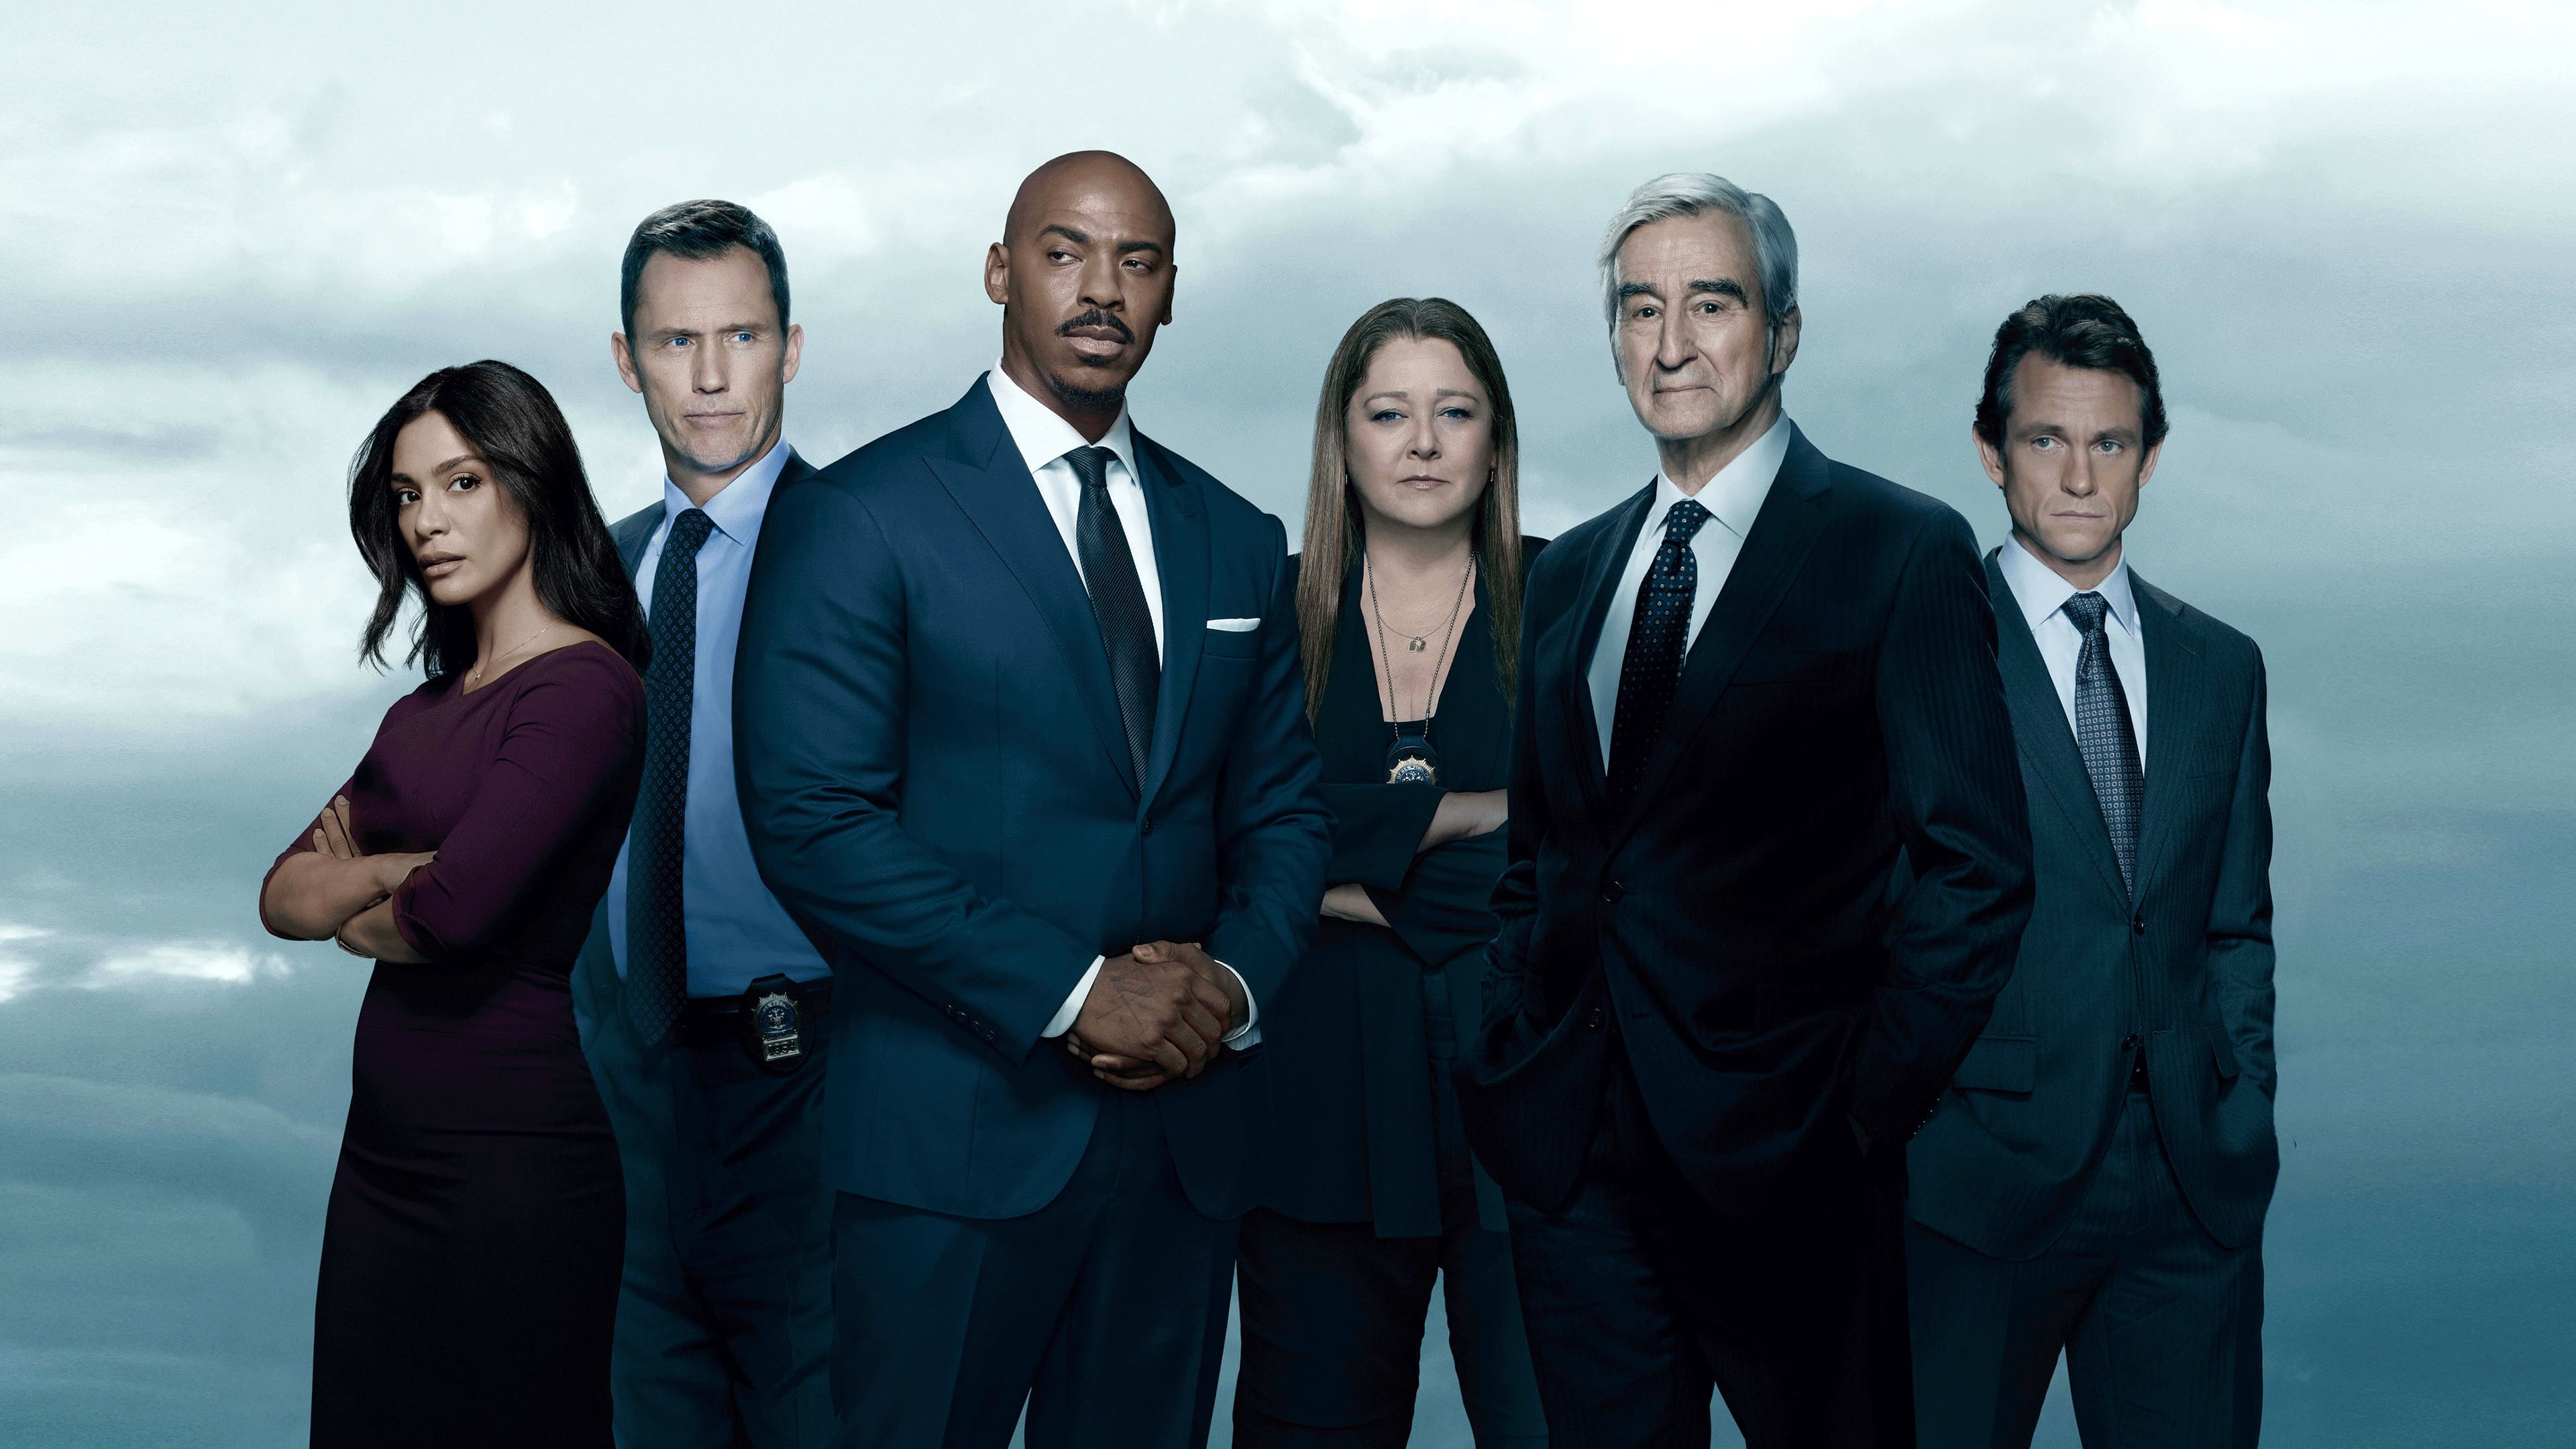 Law & Order - Season 23 Episode 7